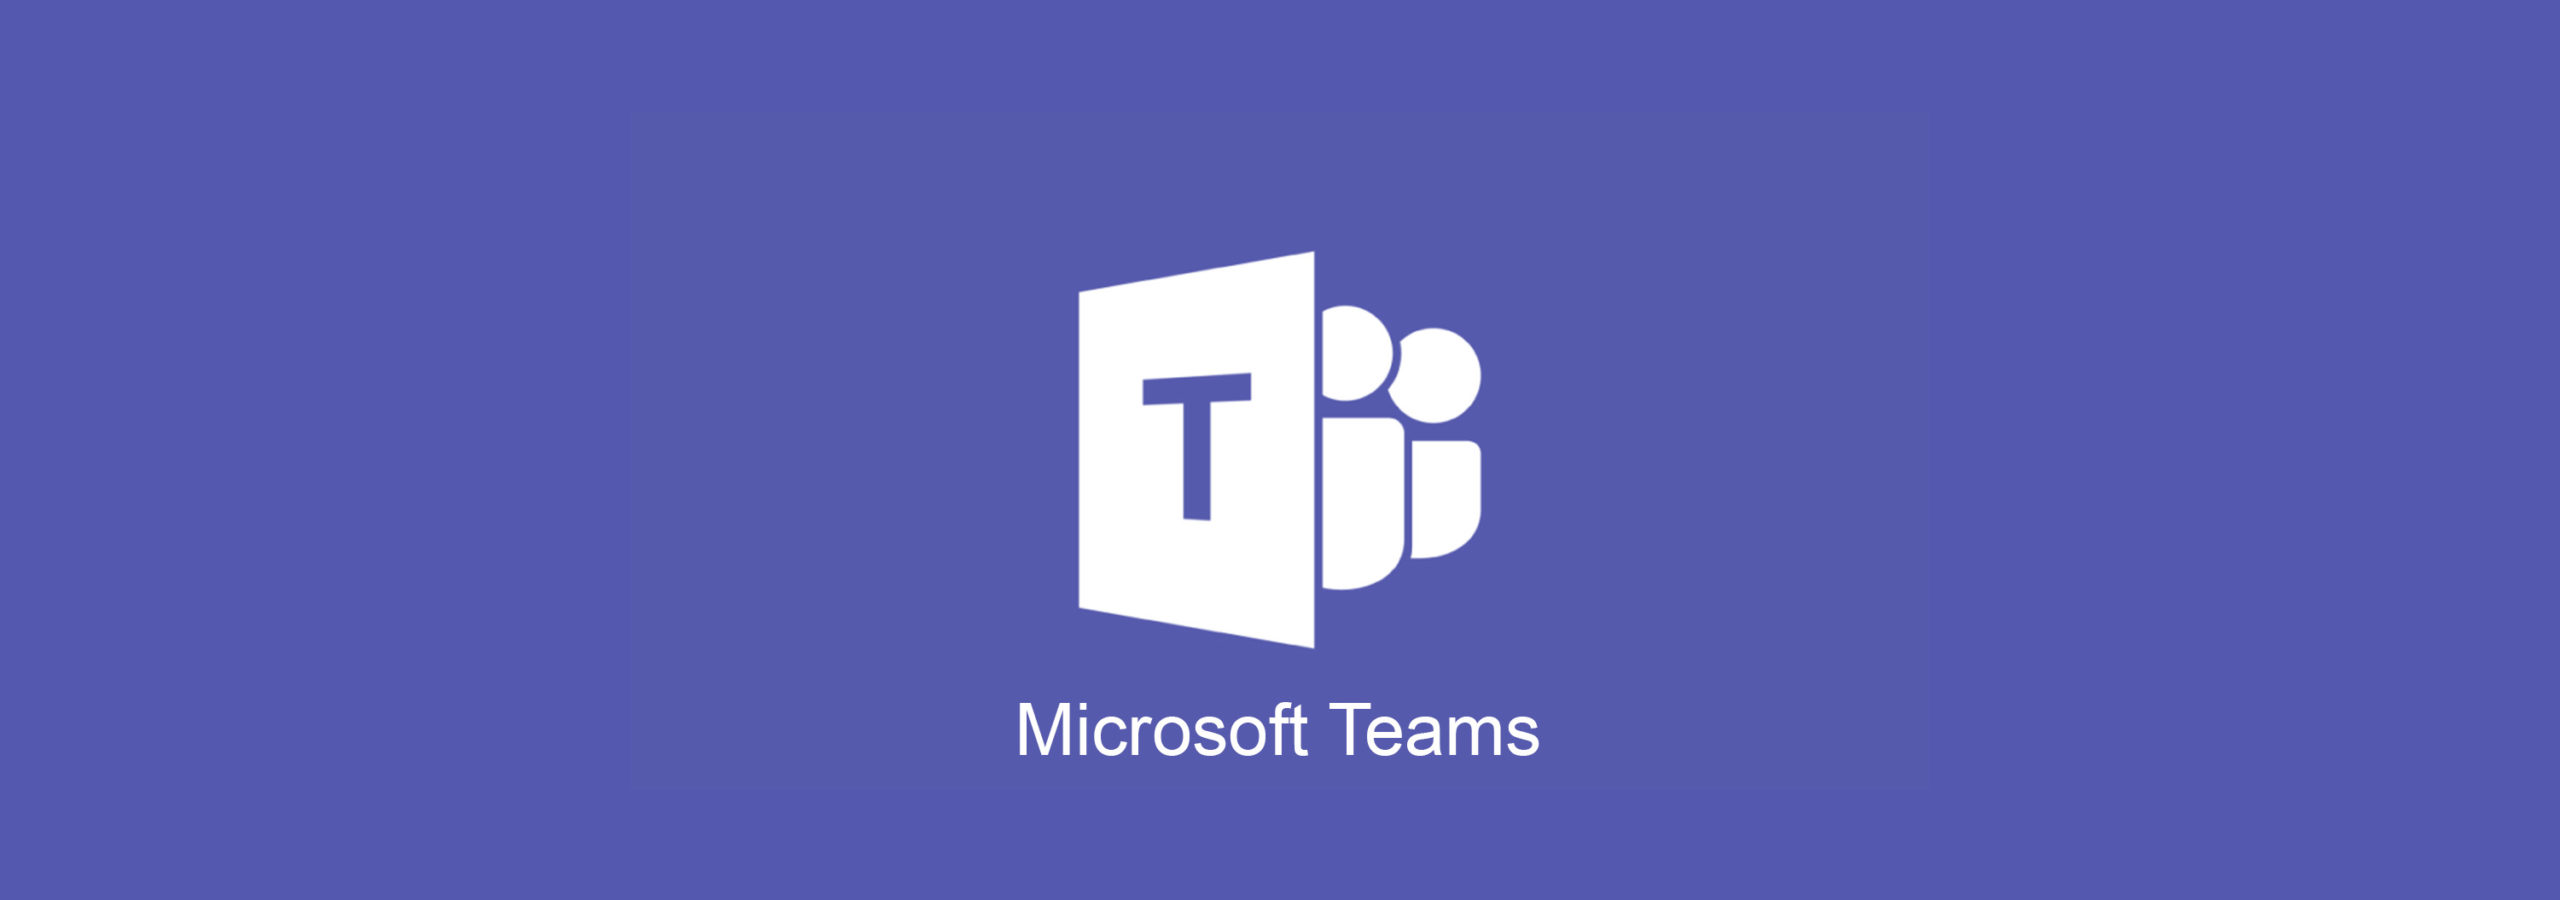 Microsoft Teams Devices - Call One, Inc Microsoft Teams - DaftSex HD